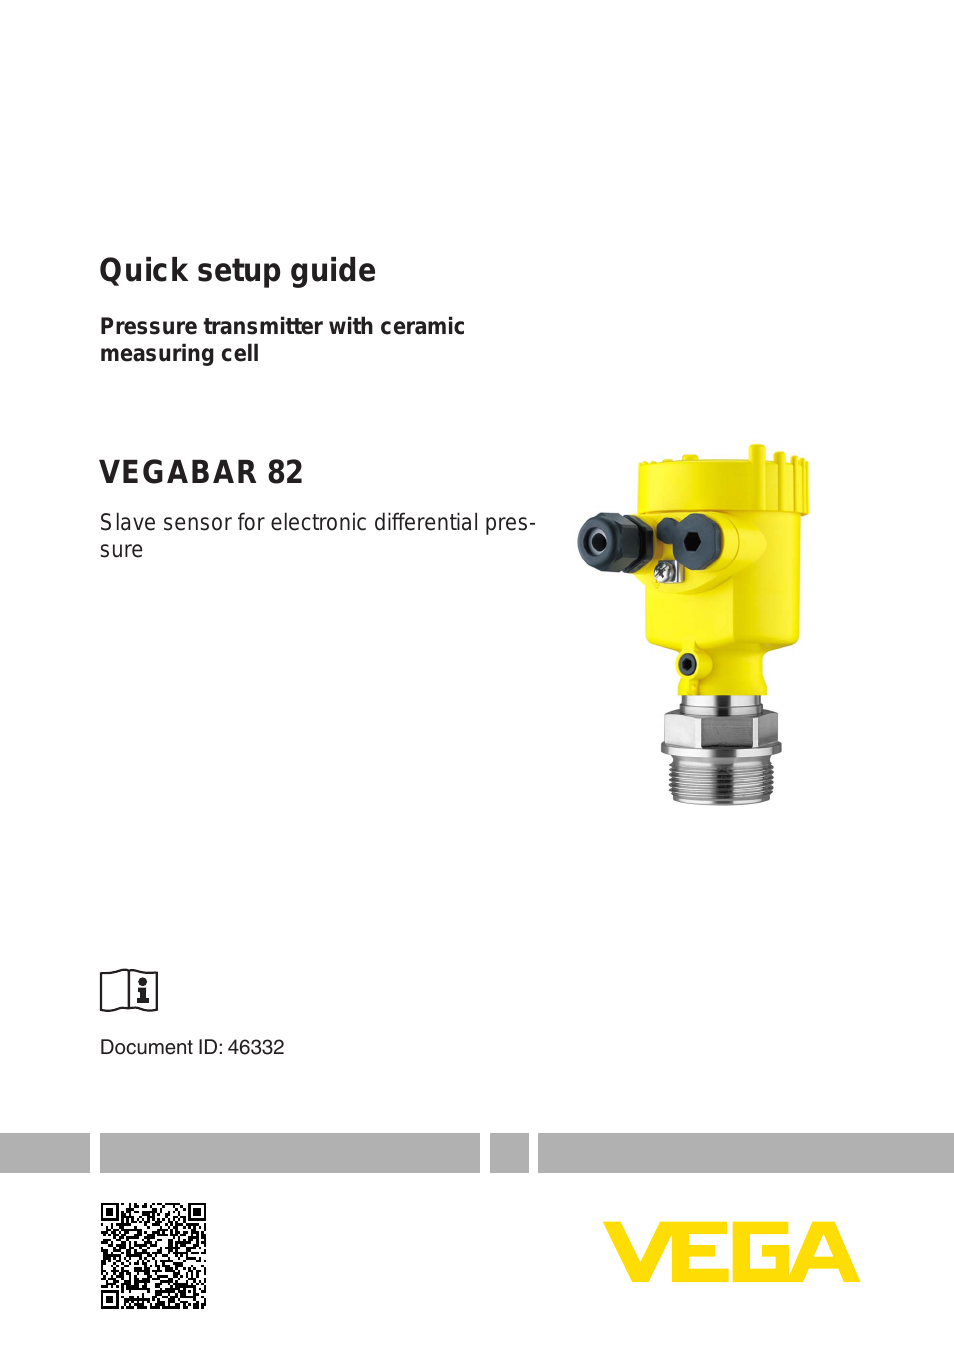 VEGABAR 82 Save sensor - Quick setup guide